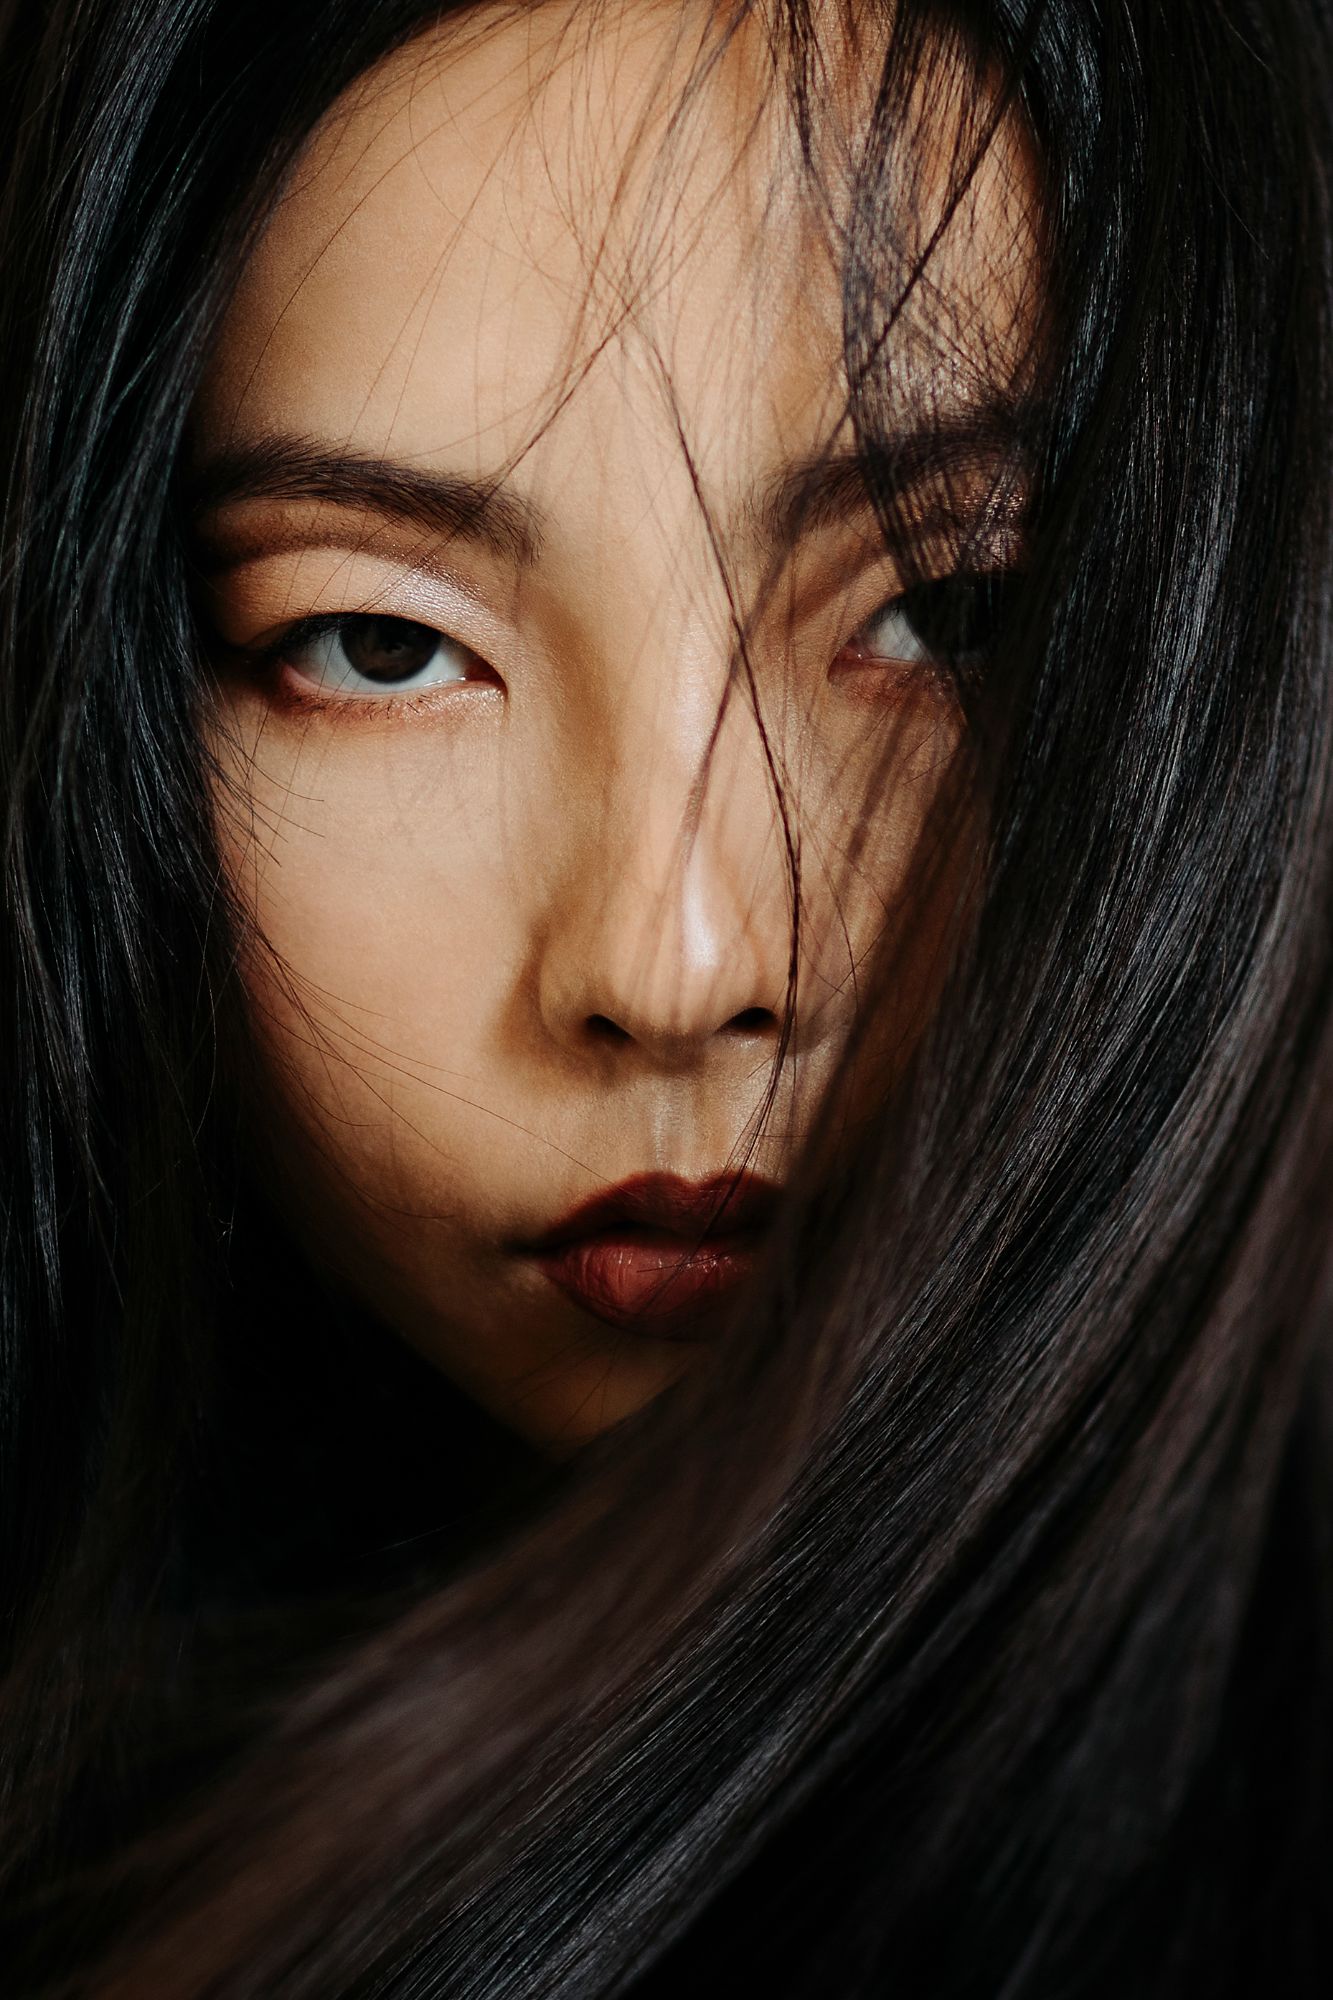 Asian girl Close Up Portrait